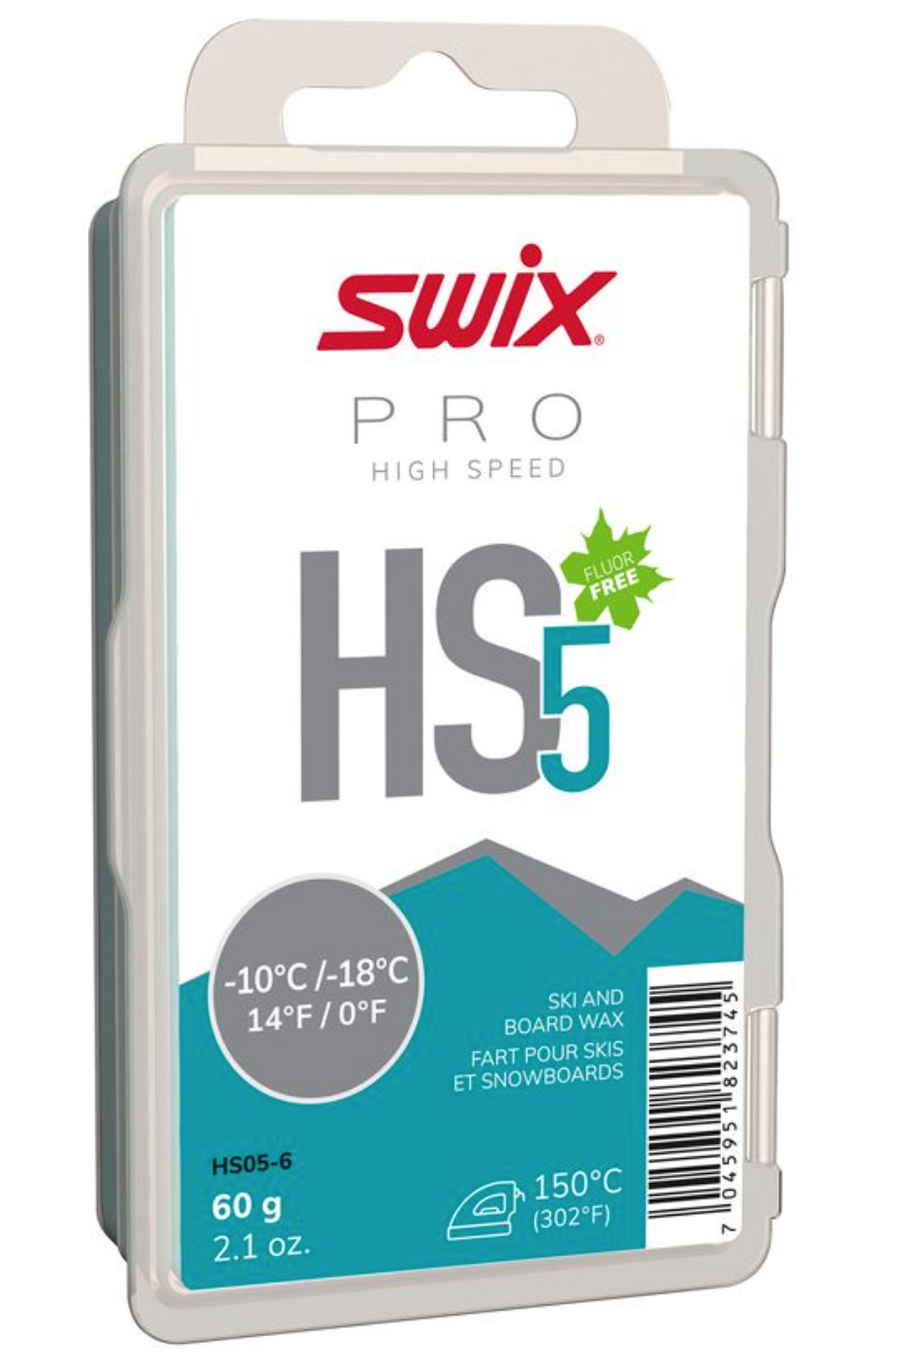 Swix HS5 Turquoise Ski Wax